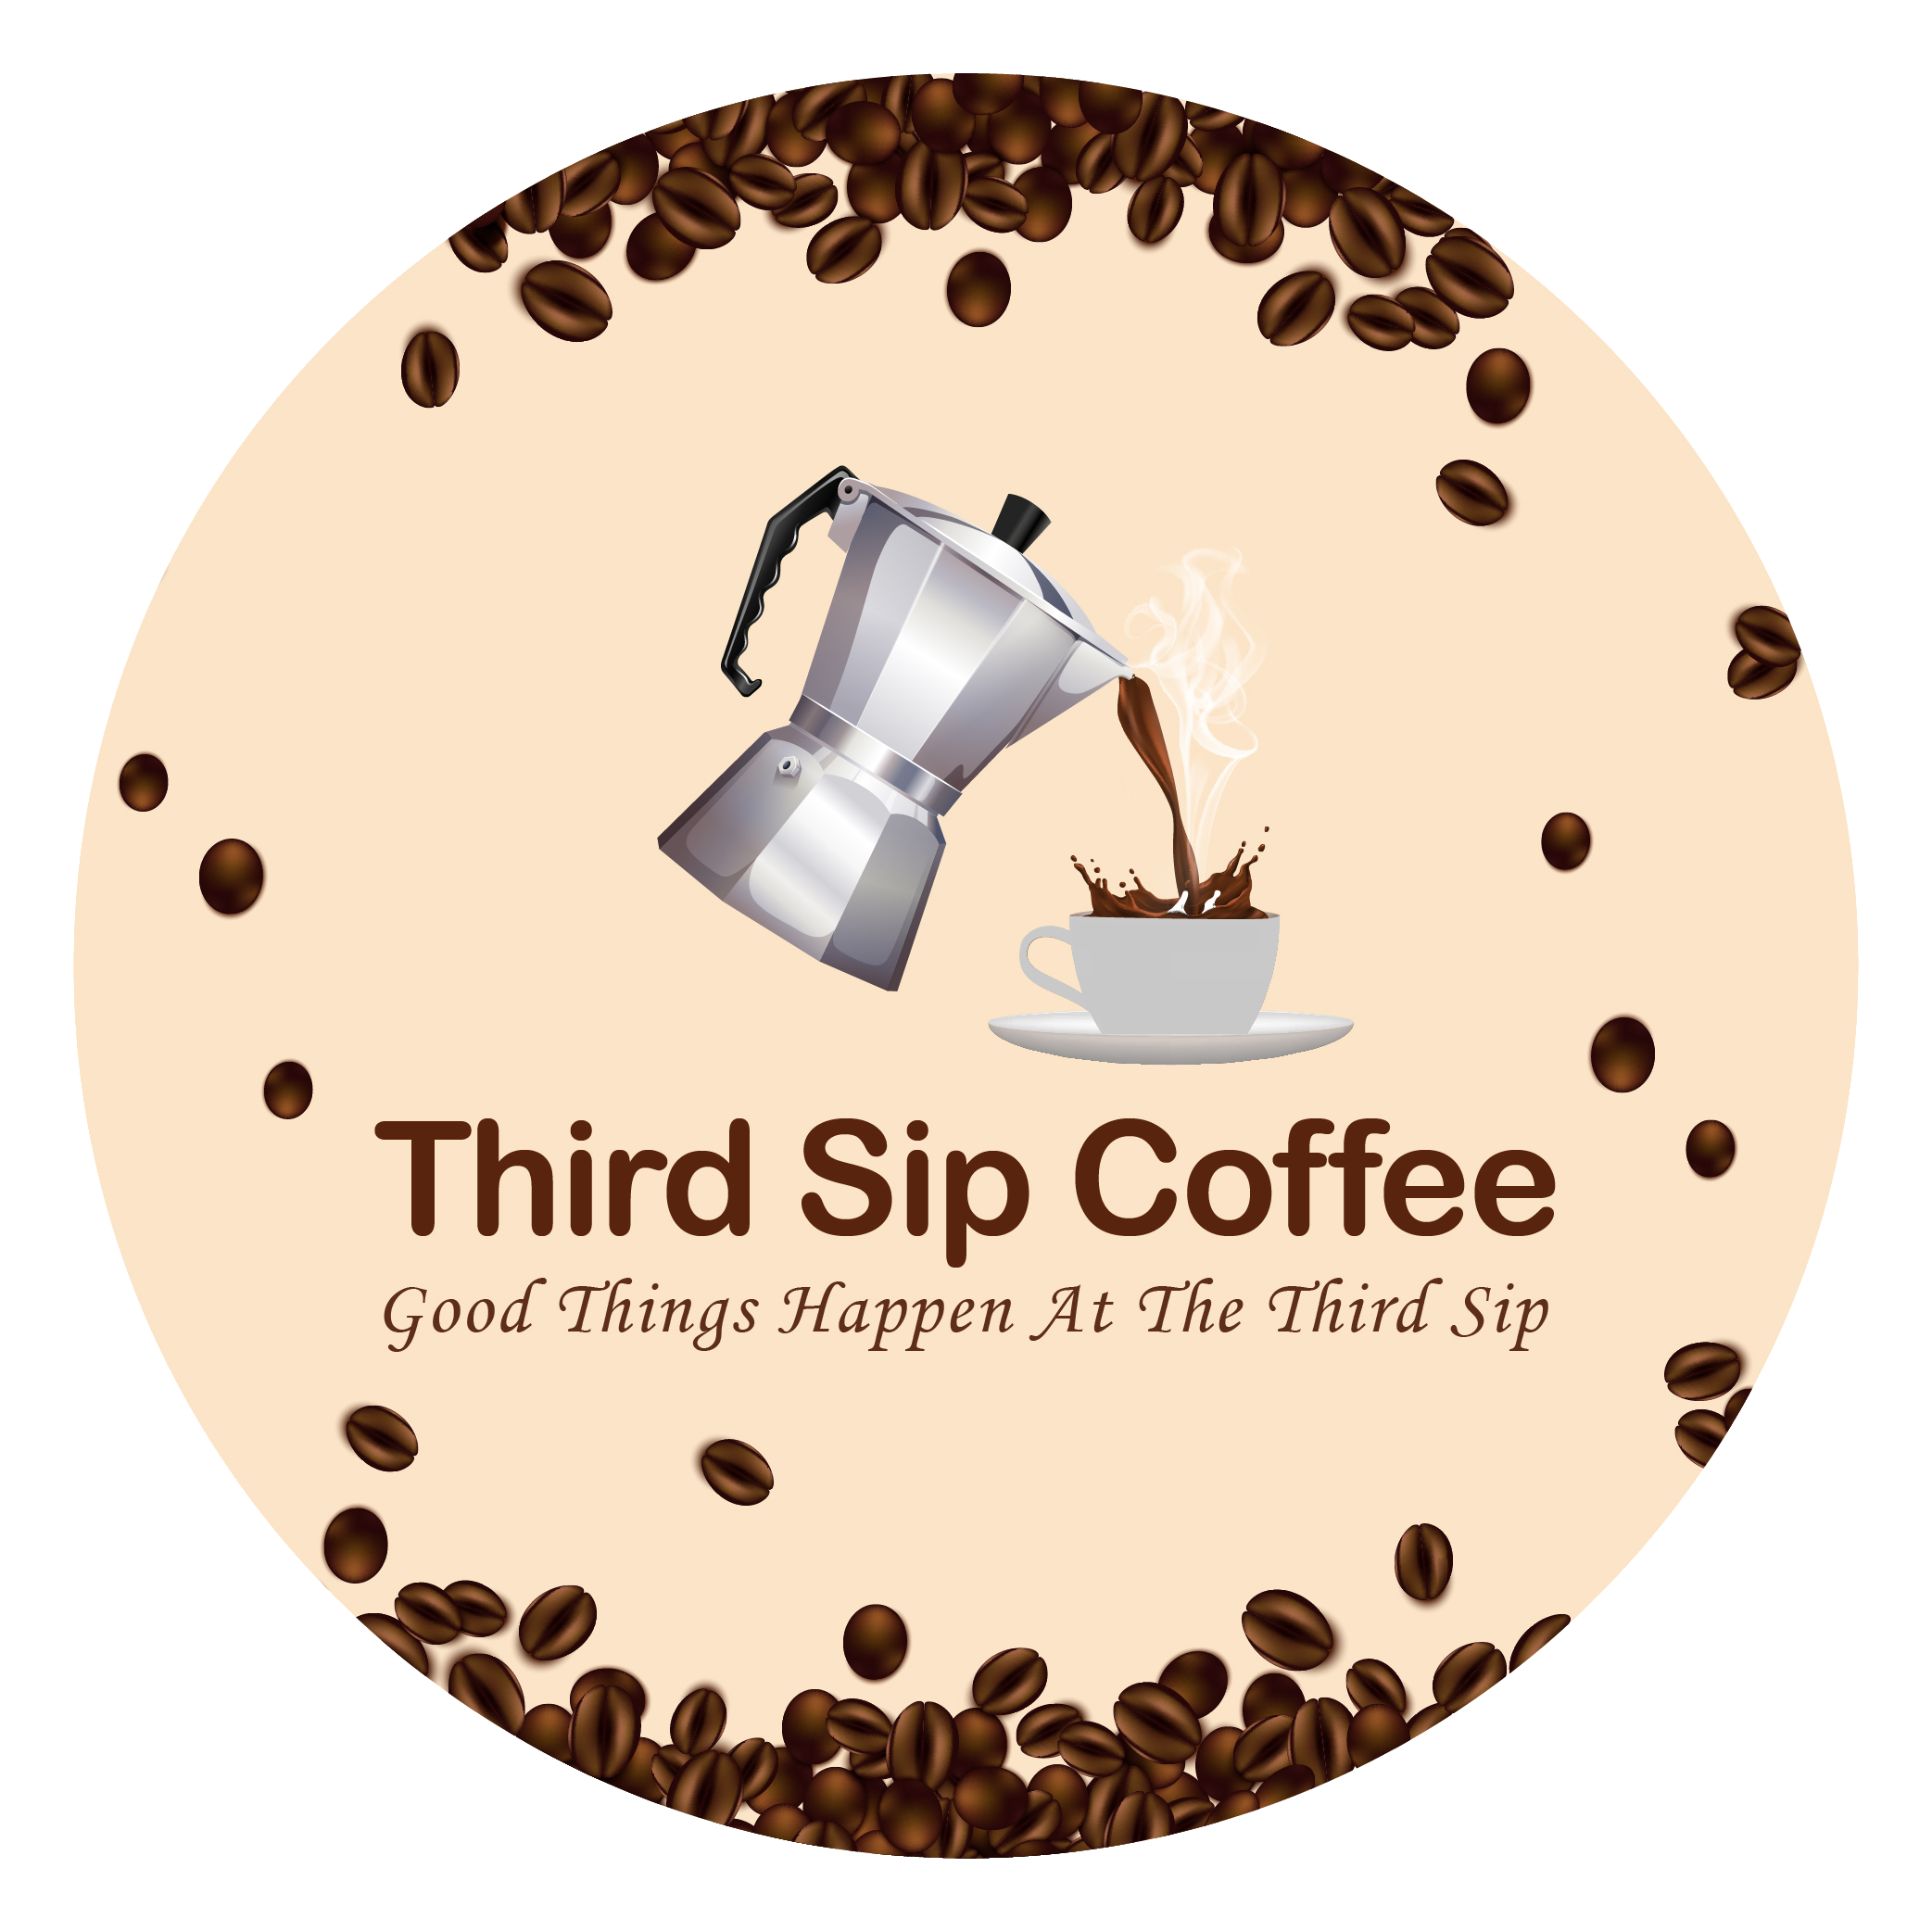 Third Sip Coffee